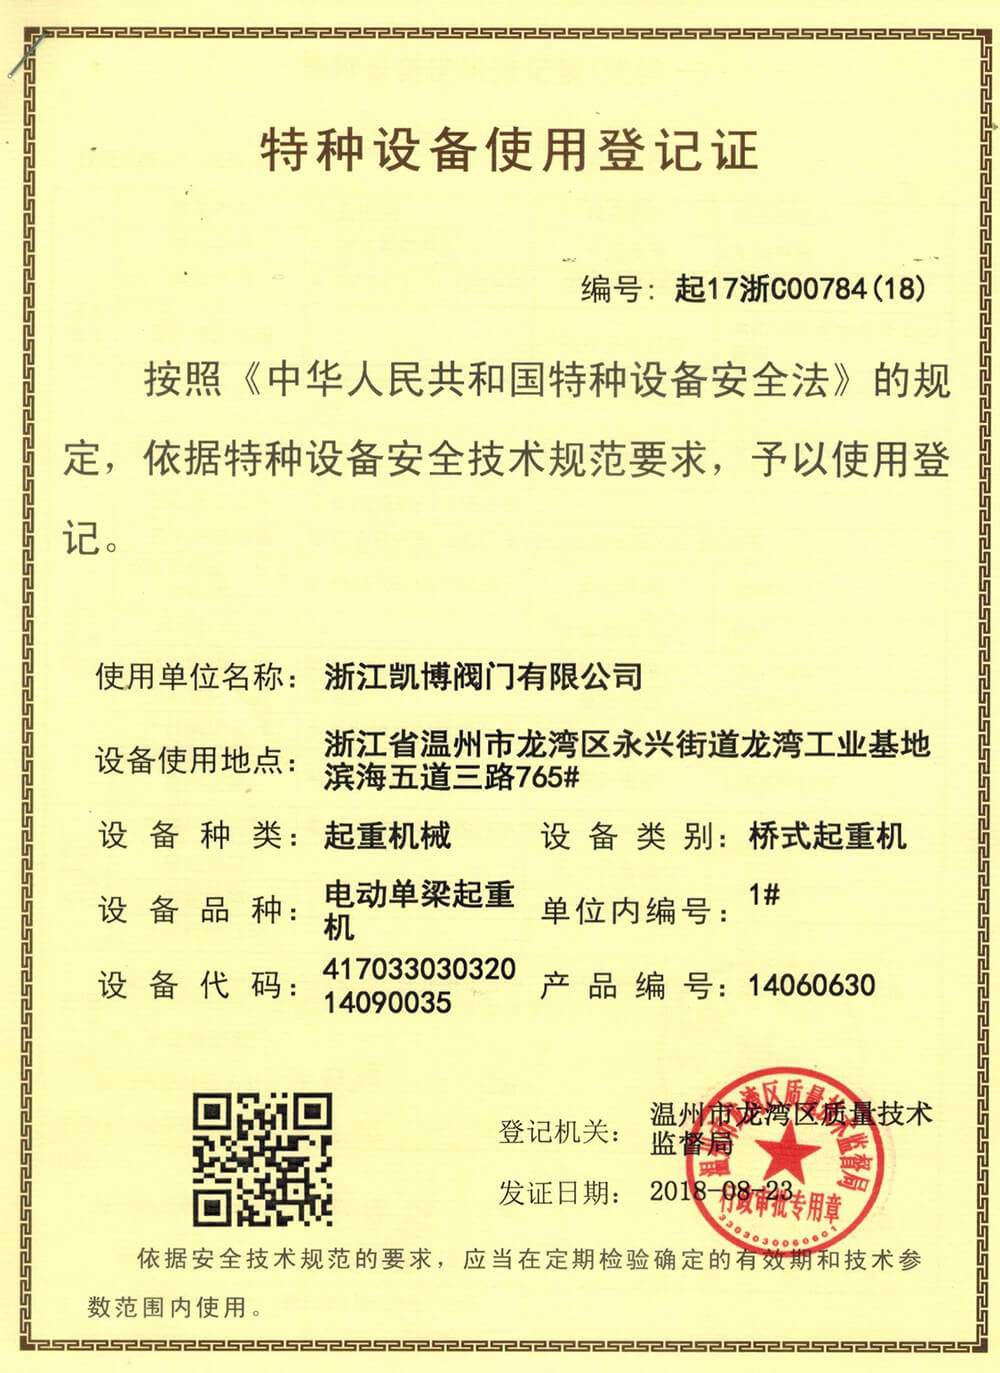 Special equipment certificate (3)